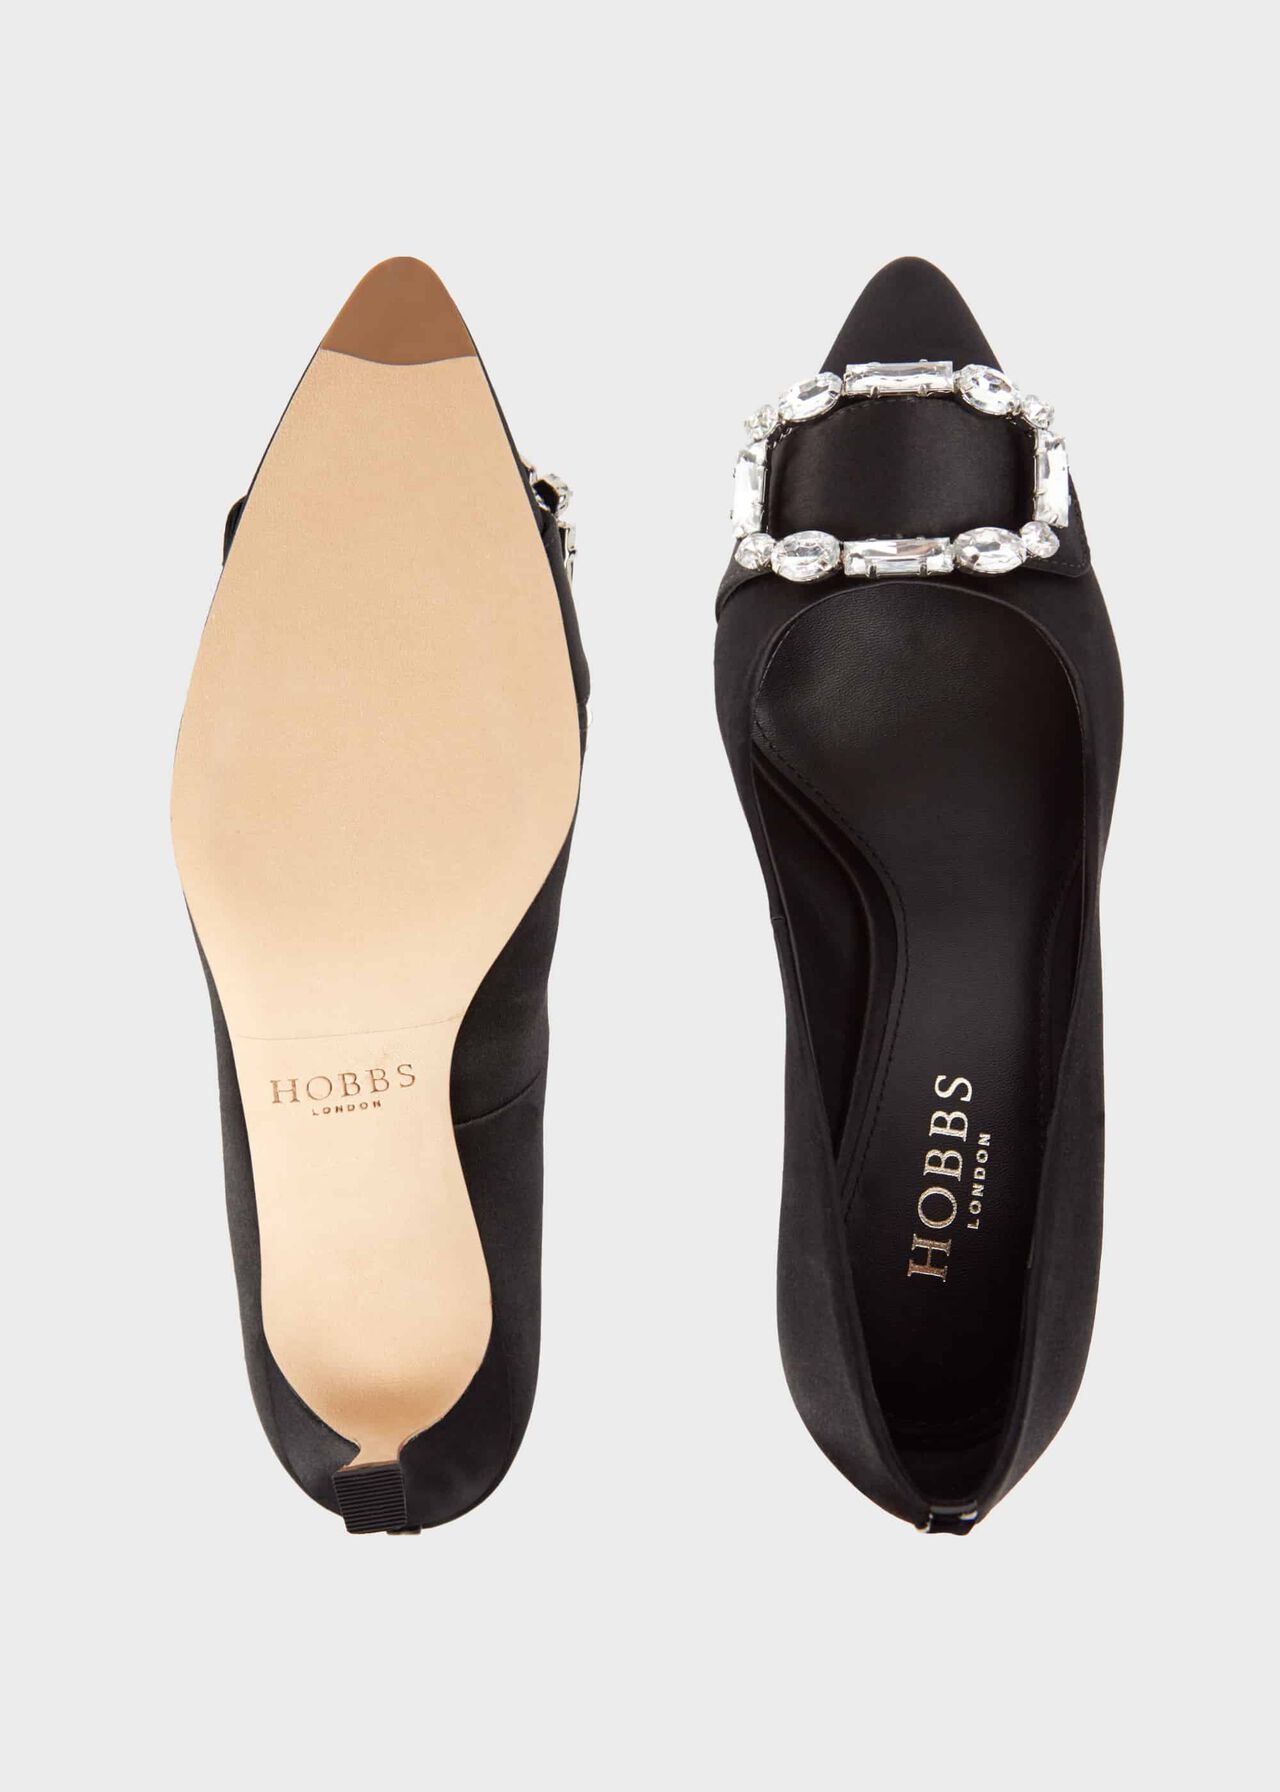 Lucinda Court Shoes, Black, hi-res